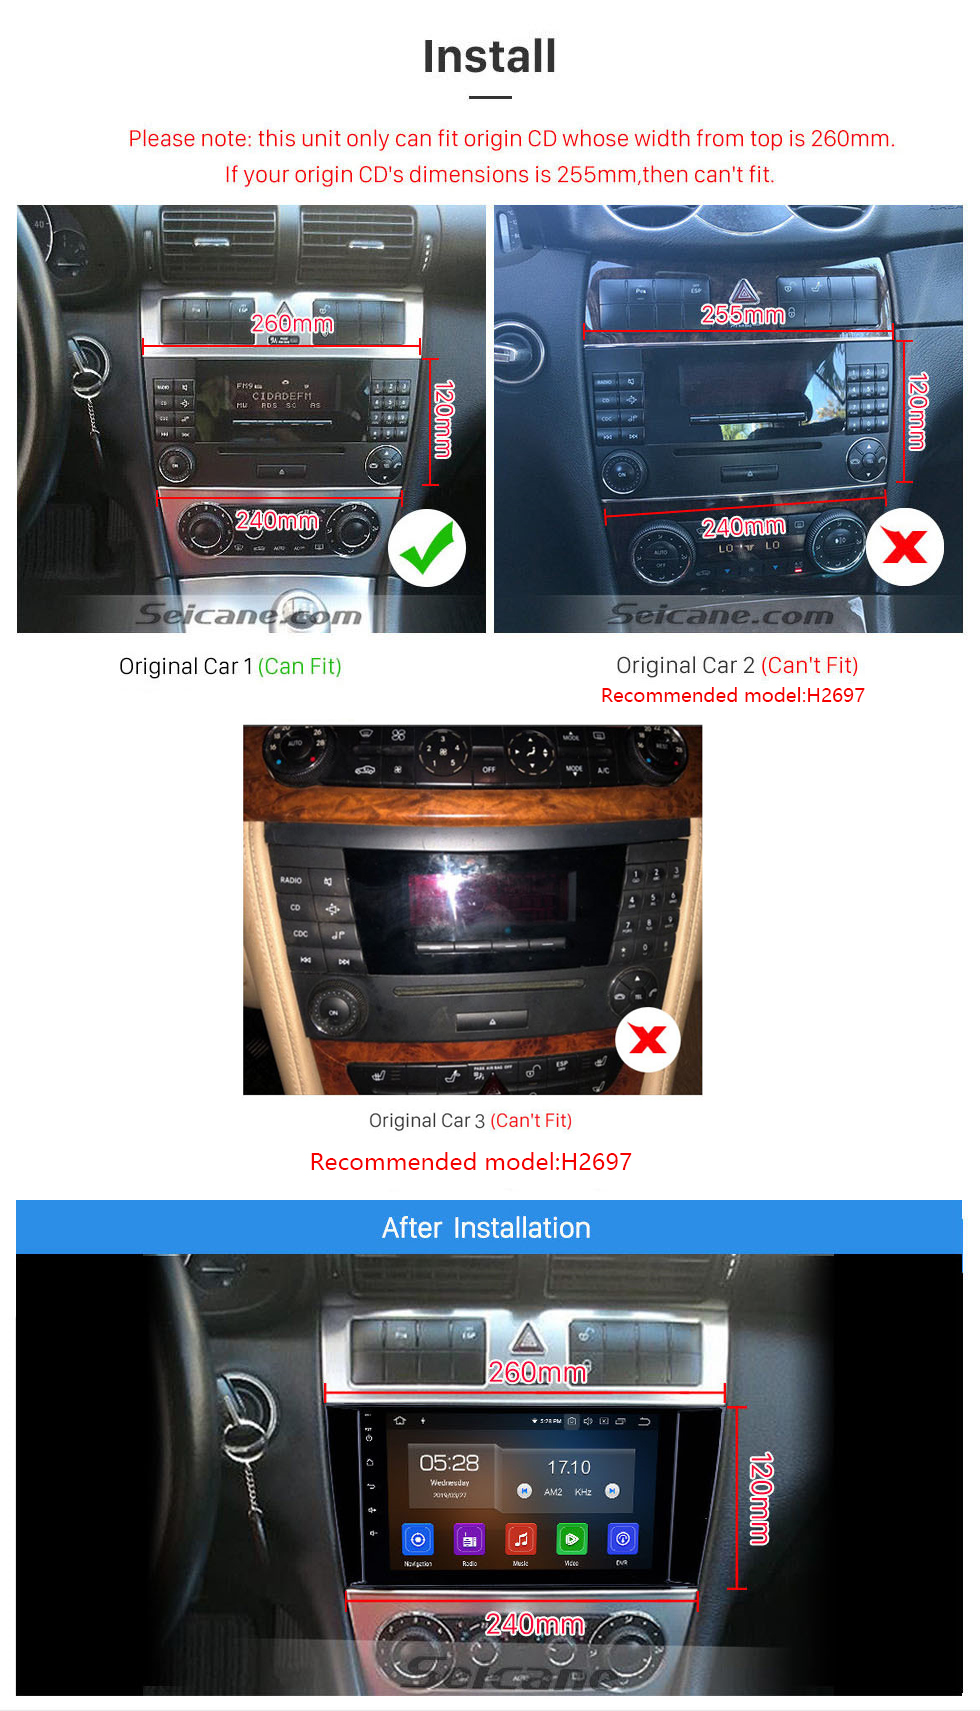 Seicane Android 12.0 Car Radio DVD GPS System for 2004-2011 Mercedes Benz C Class W203 C180 C200 C220 C230 with 4G WiFi AM FM Radio Bluetooth Mirror Link OBD2 AUX DVR